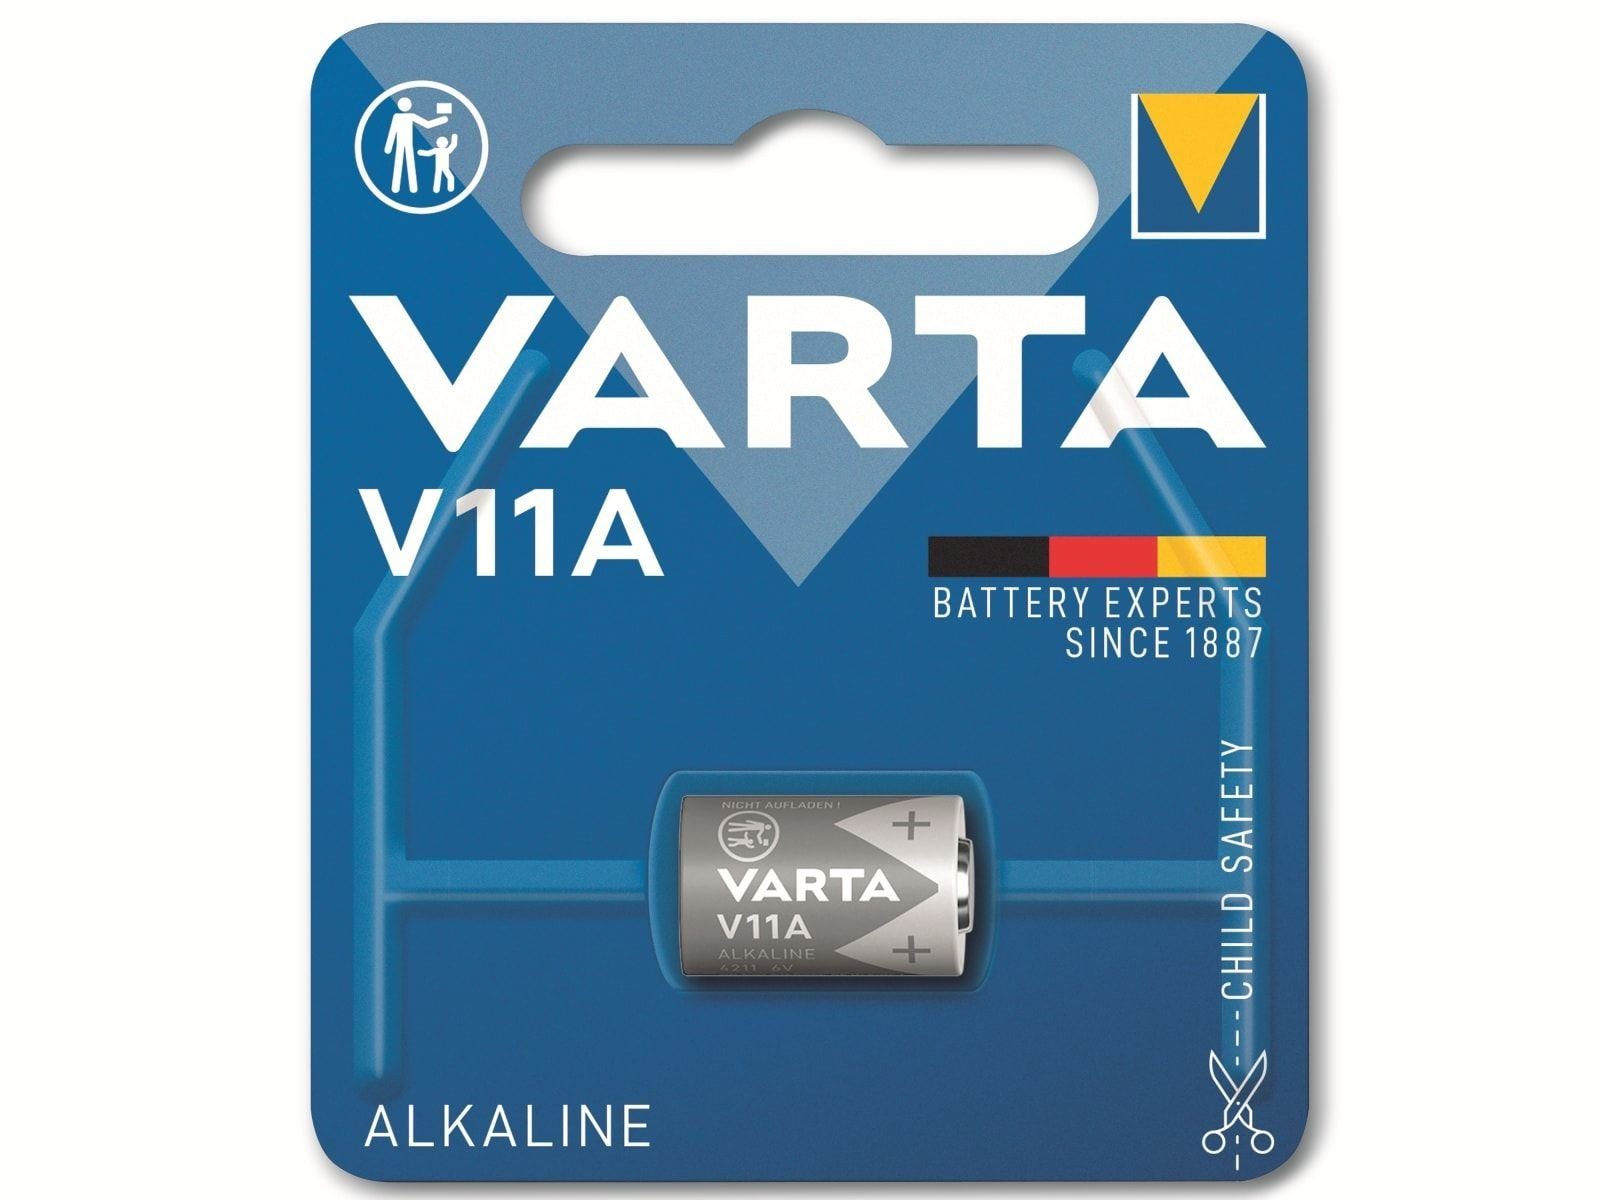 VARTA VARTA Batterie Alkaline, MN11, V11A, 6V Batterie